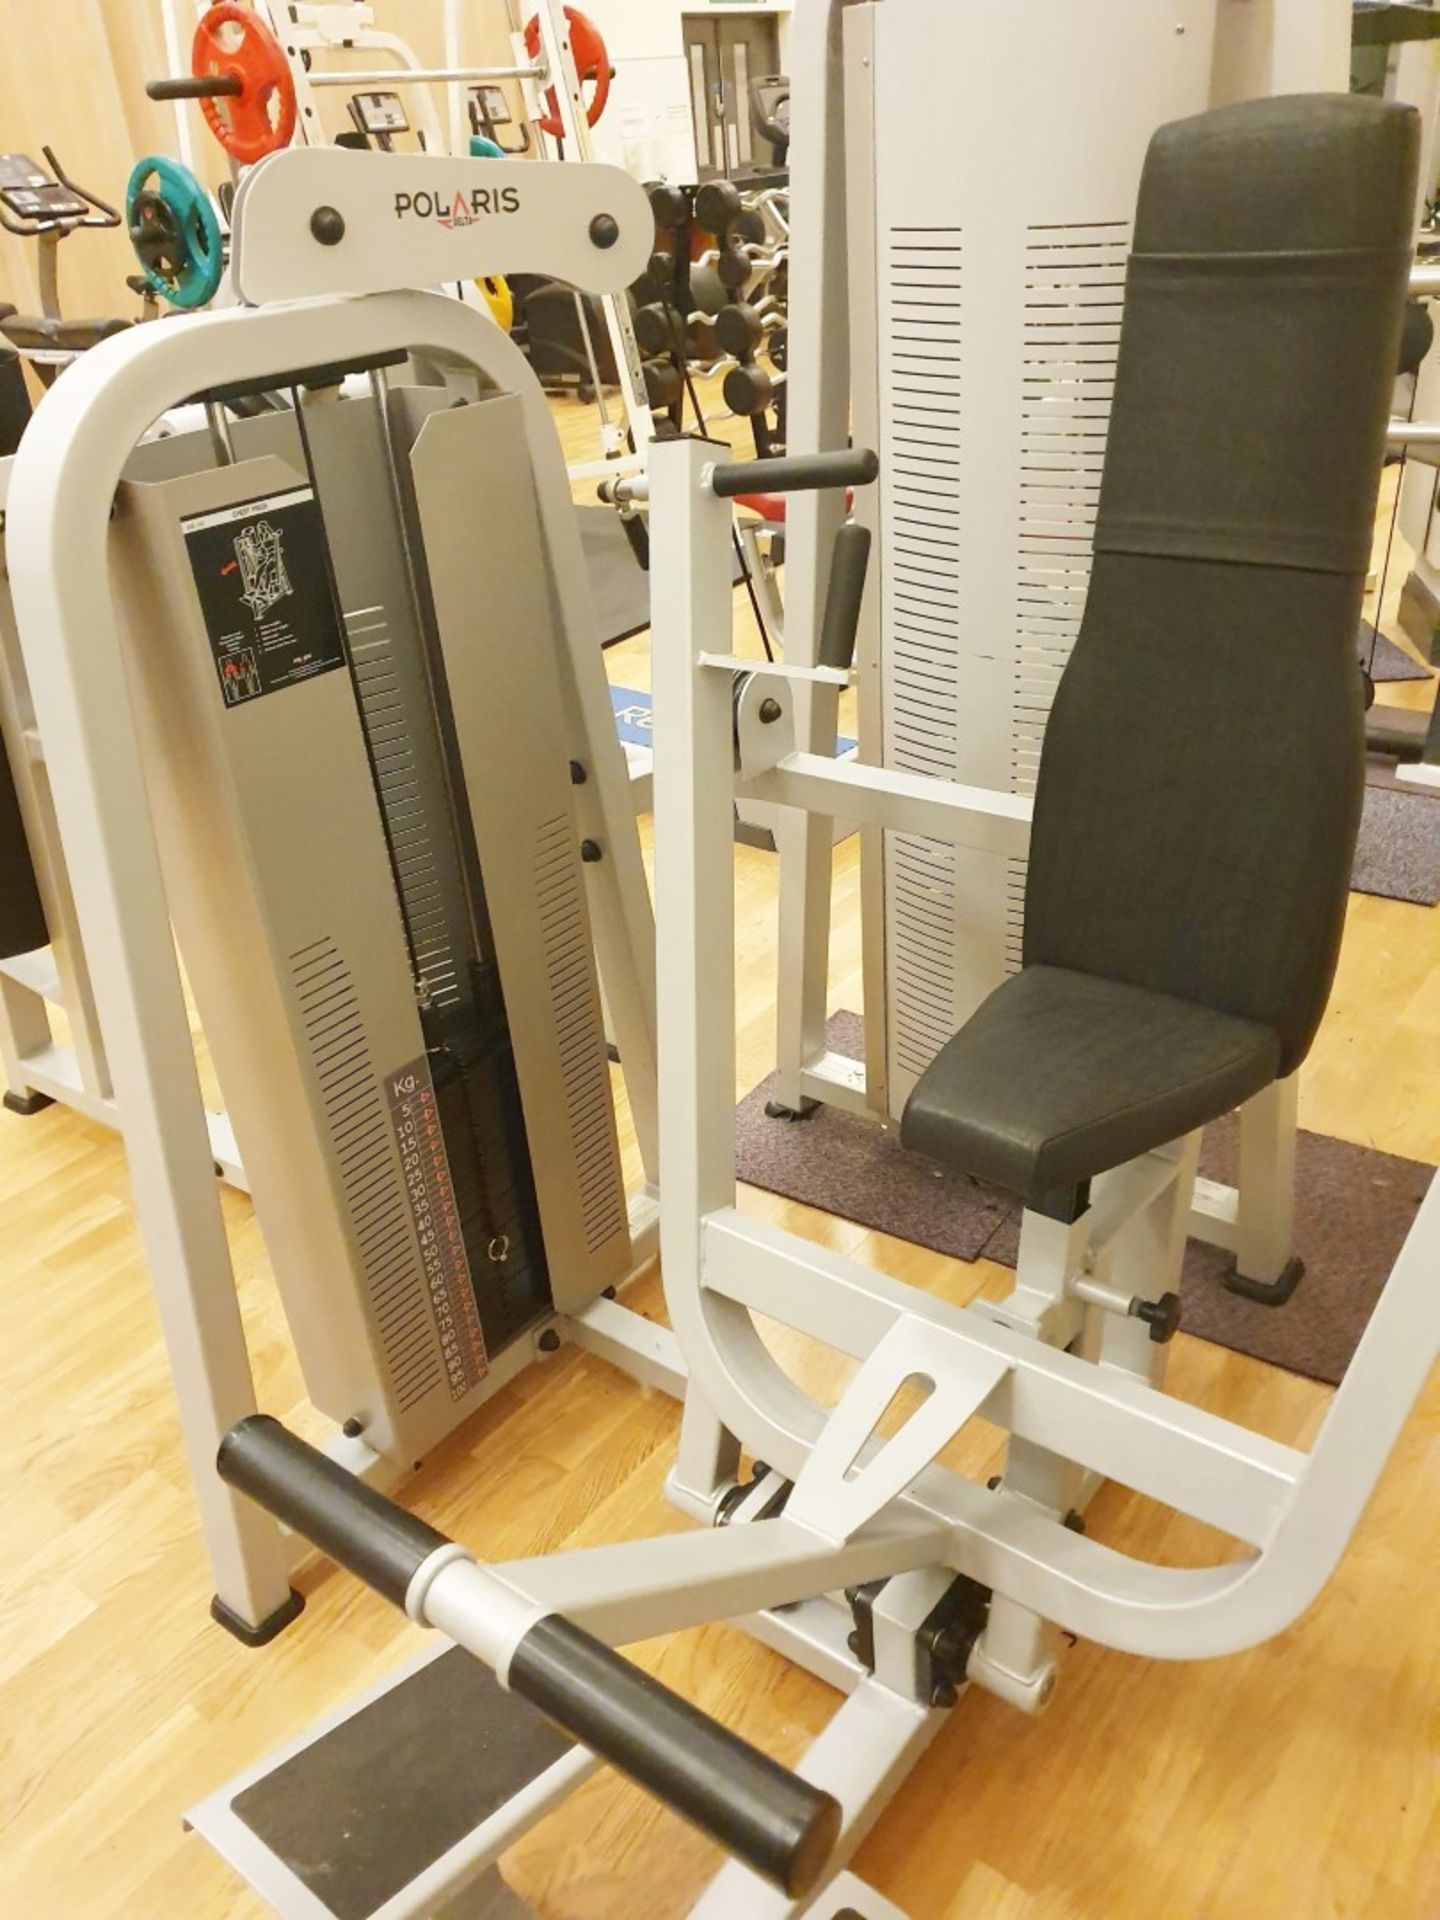 1 x Polaris DE-101 Chest Press Commercial Gym Machine - CL552 - Location: West Yorkshire This item - Image 4 of 4